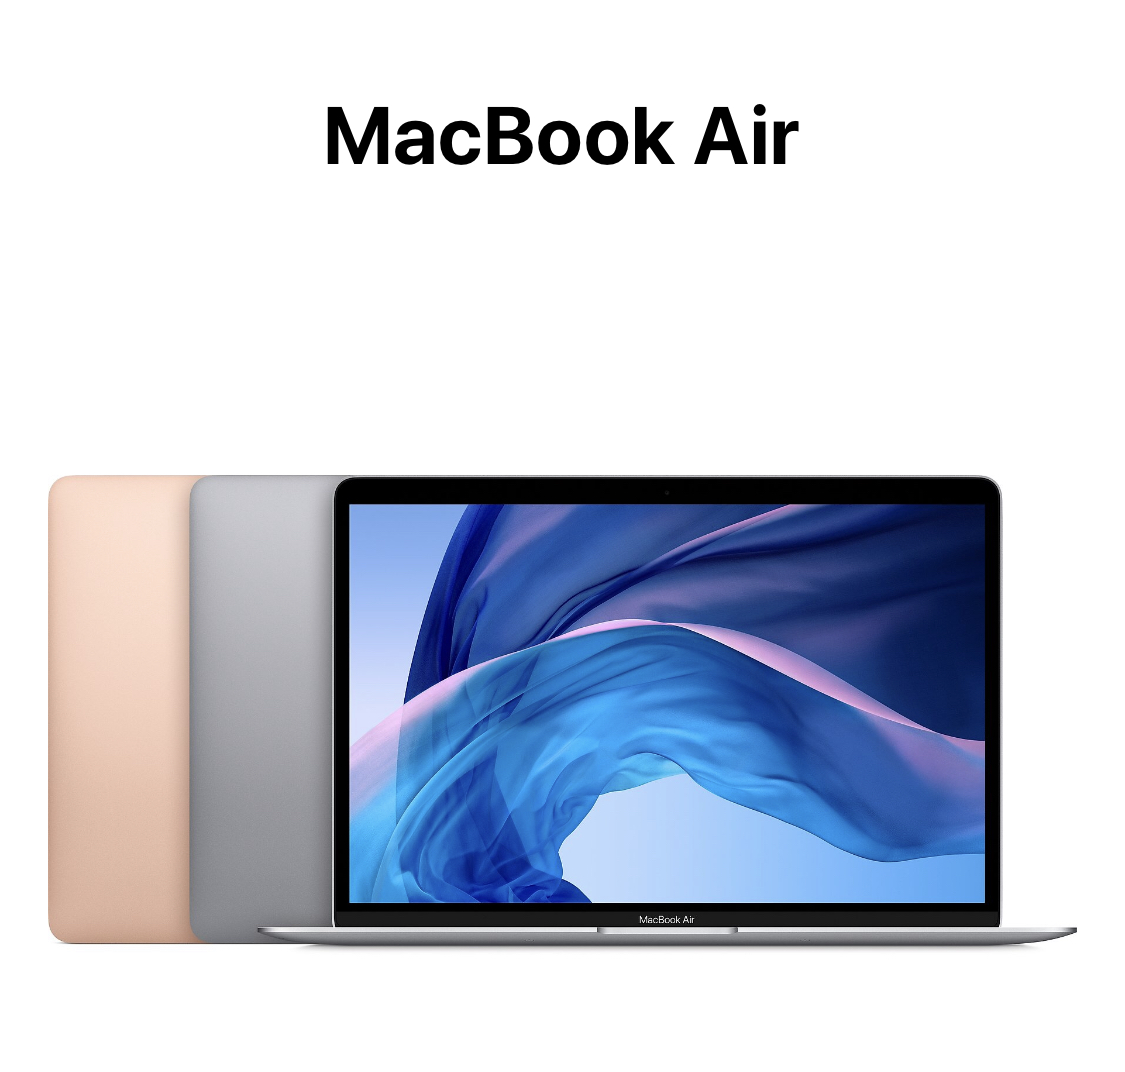 MacBook Air2020が発表される前にMacBook Air2019のスペックをまとめたりしたお話｜39あます